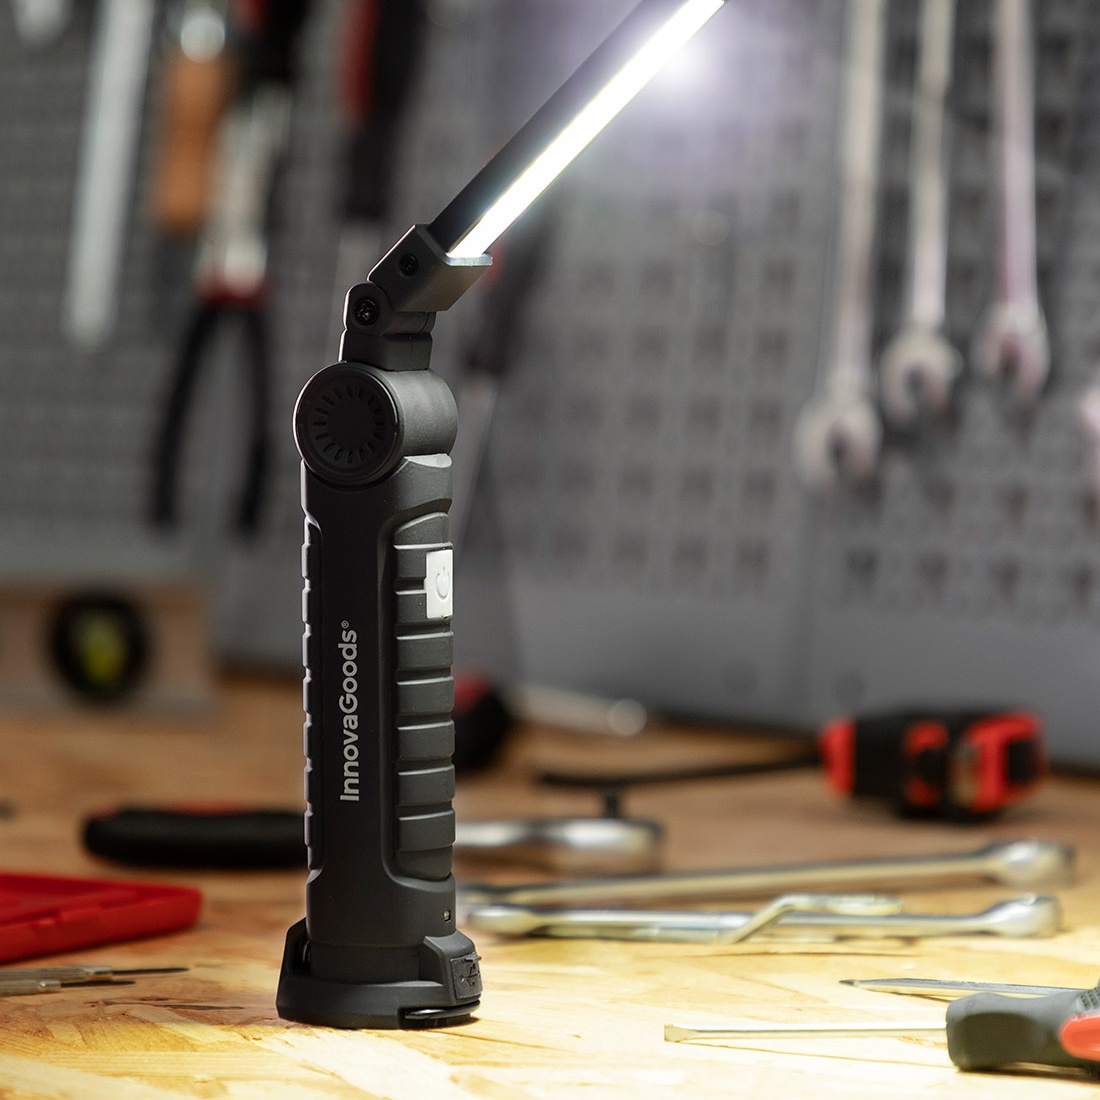  RUWQ Luces de camping – Linterna portátil de batería